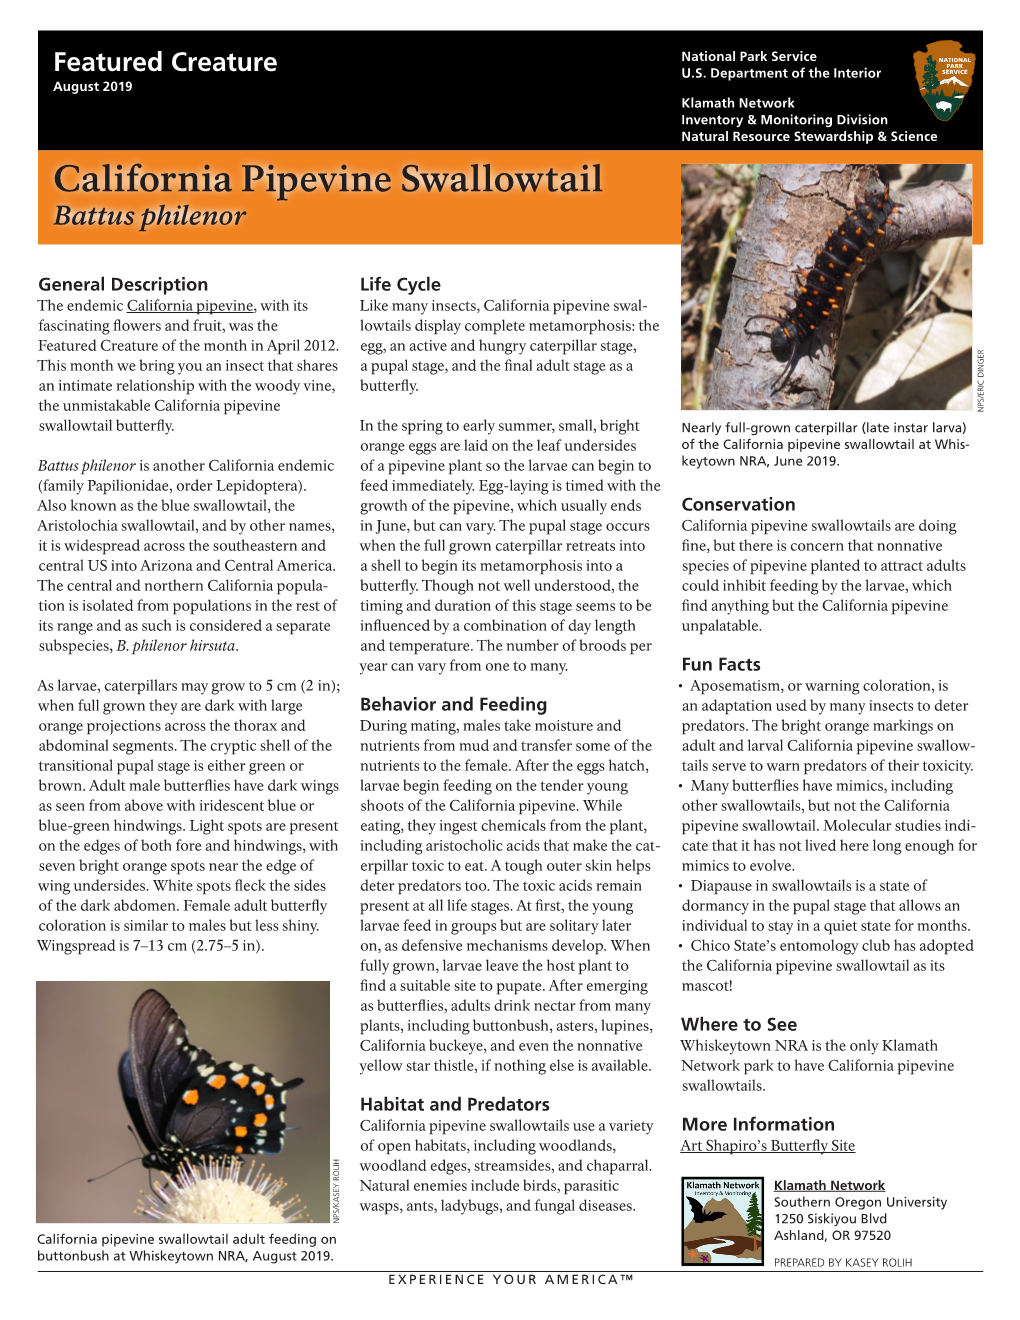 California Pipevine Swallowtail Battus Philenor